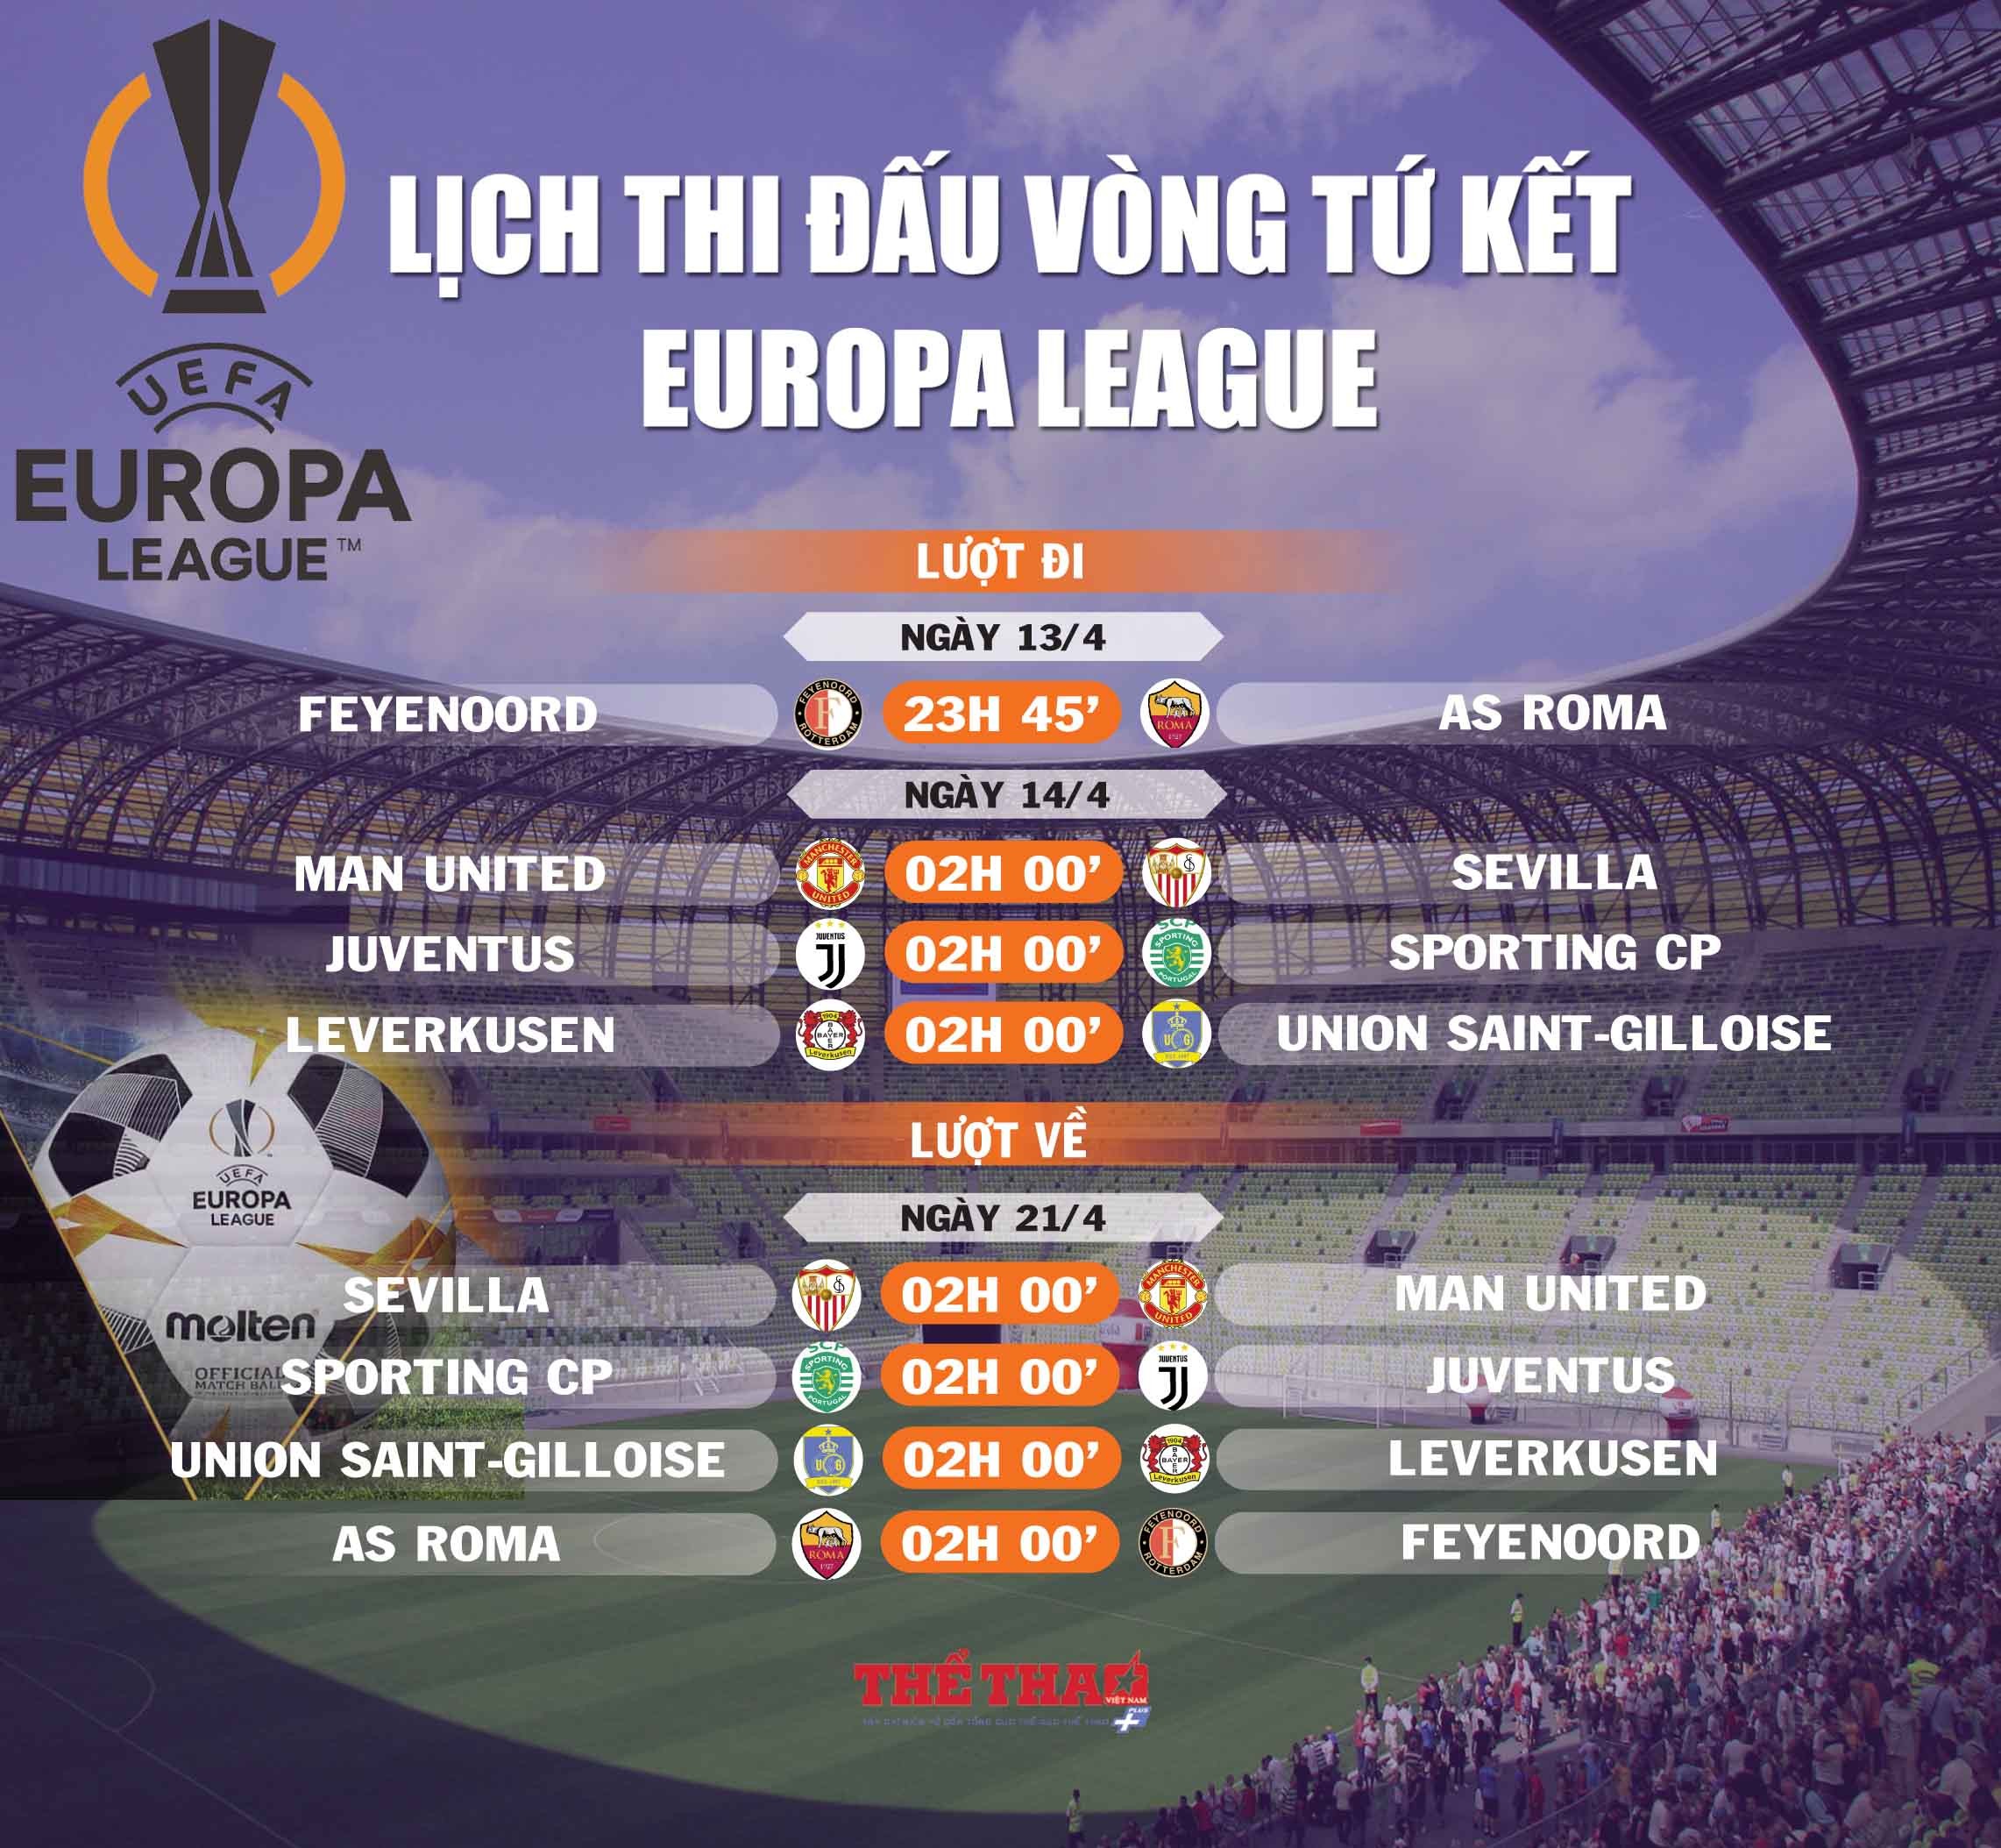 europa-league-tu-ket-copy-1681278254.jpg